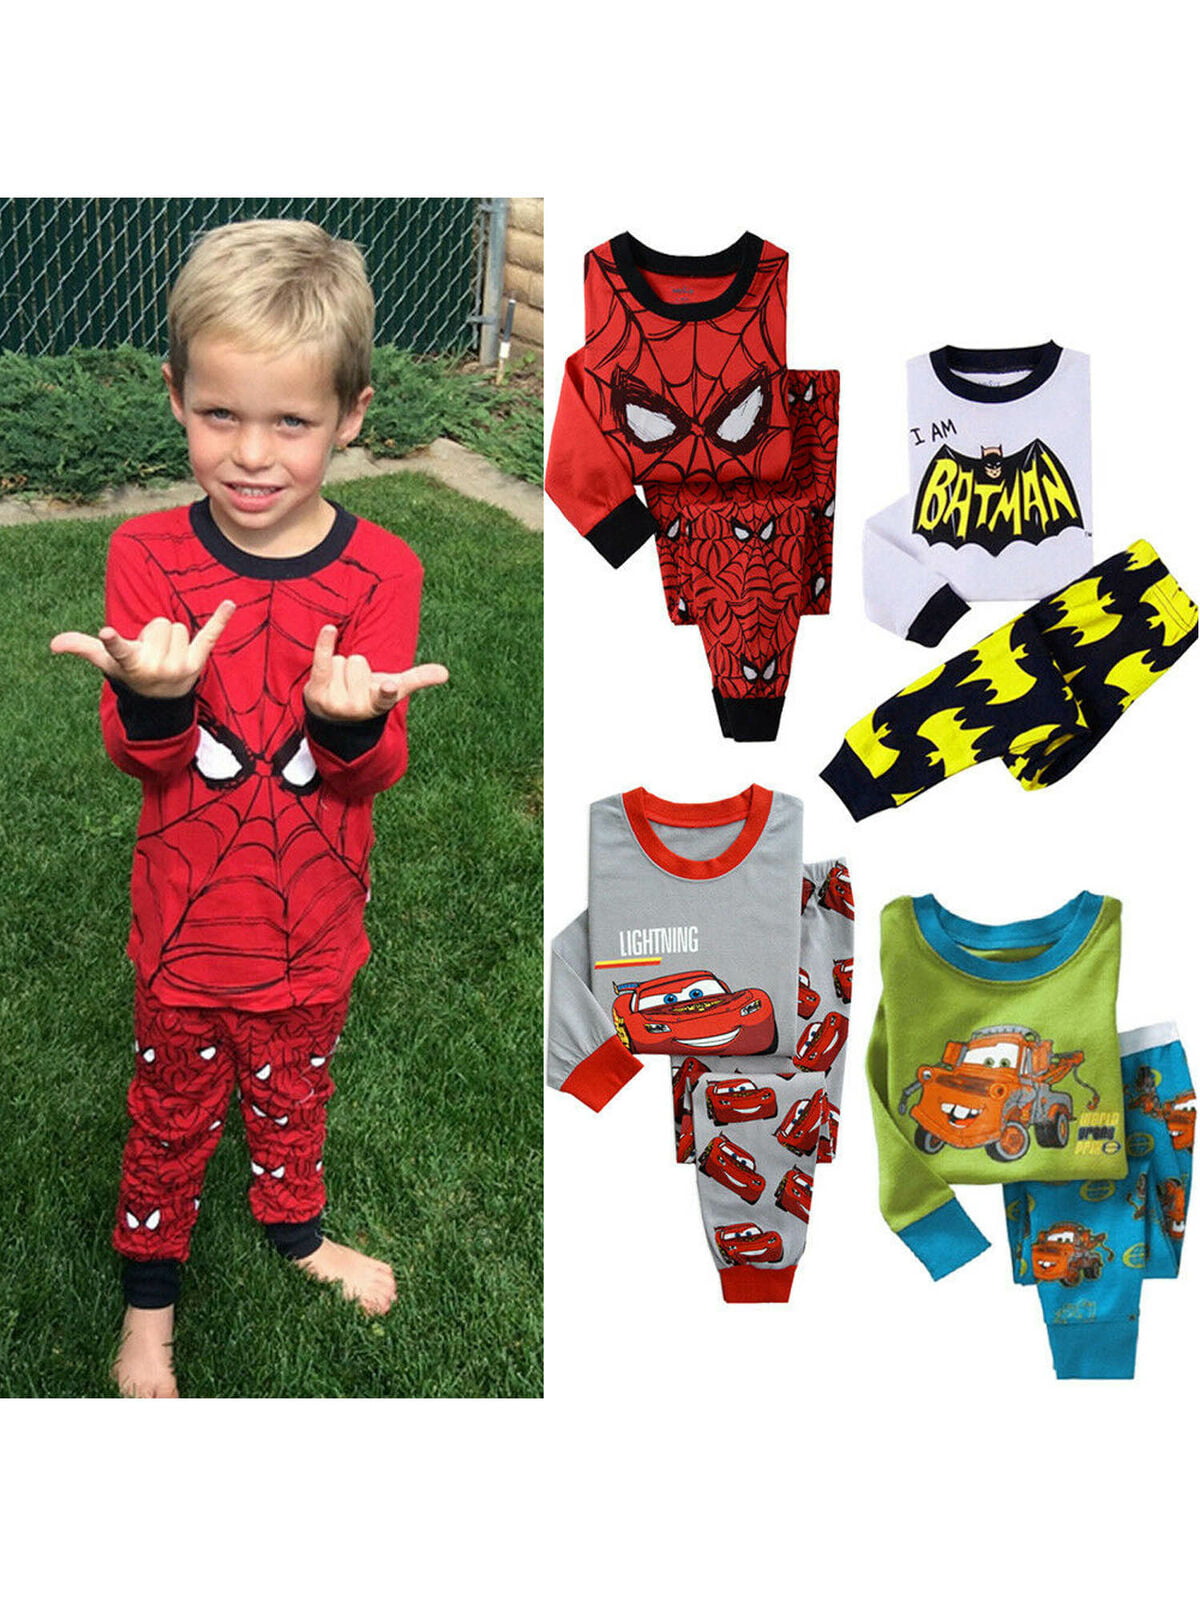 Kids Official Character Pyjama Set Pyjamas Nightwear Long Sleeve Bottoms Toddler Boys Girls Baby Gift 18 Months 5 Years